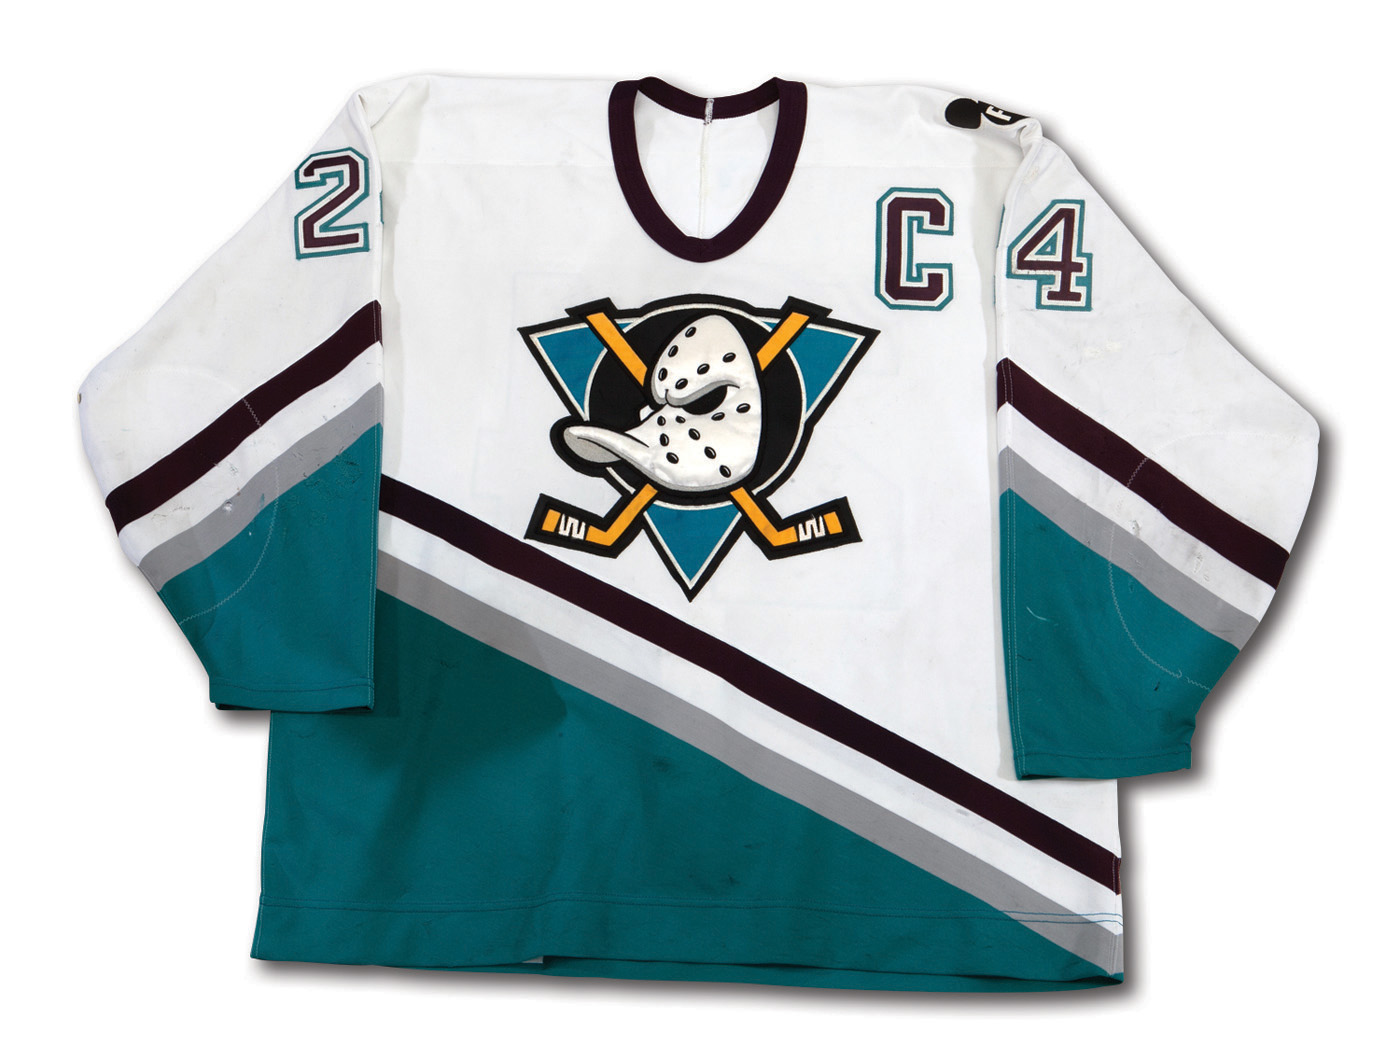 1993 Anaheim Mighty Ducks Prototype Jerseys & Original Development